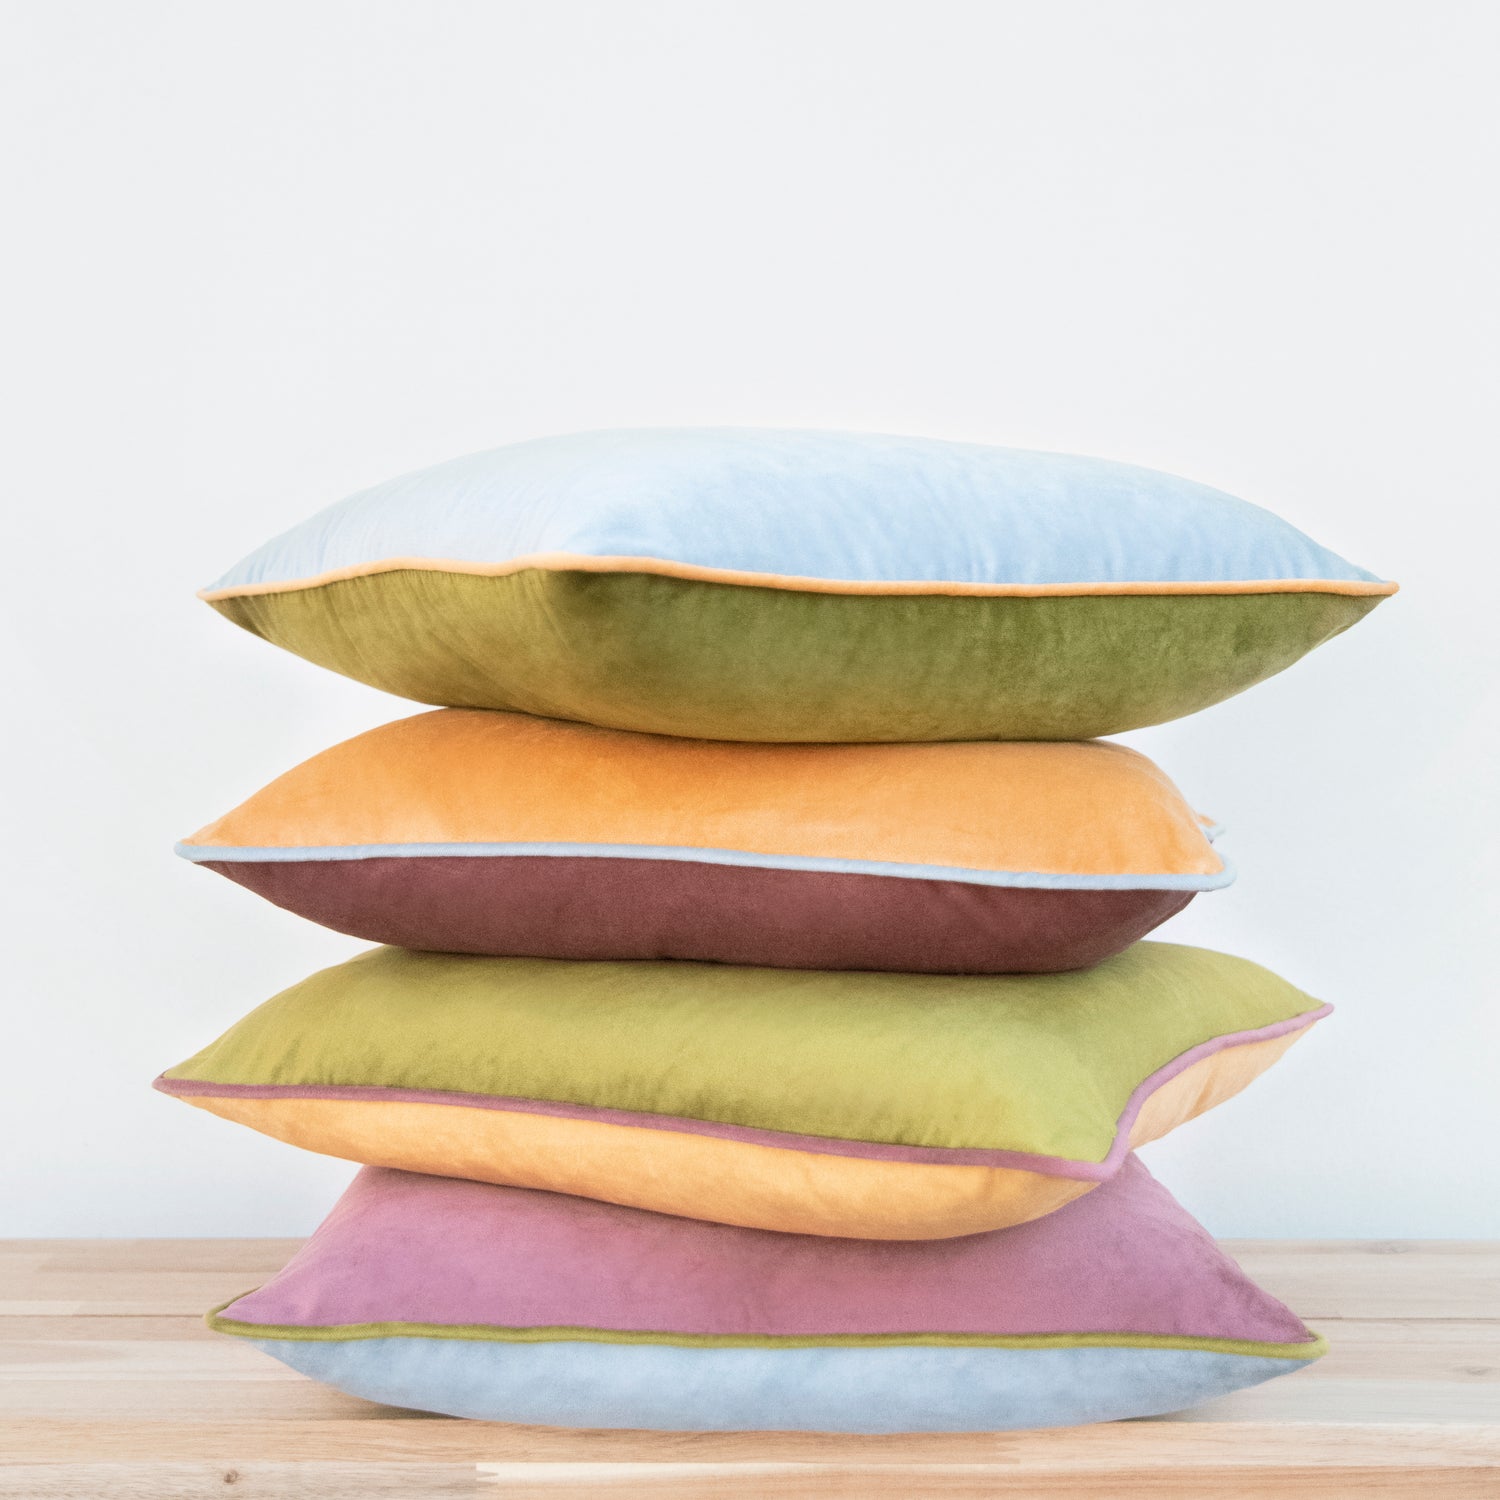 Monteverde Pillows (4-Pack) - Brown/Beige